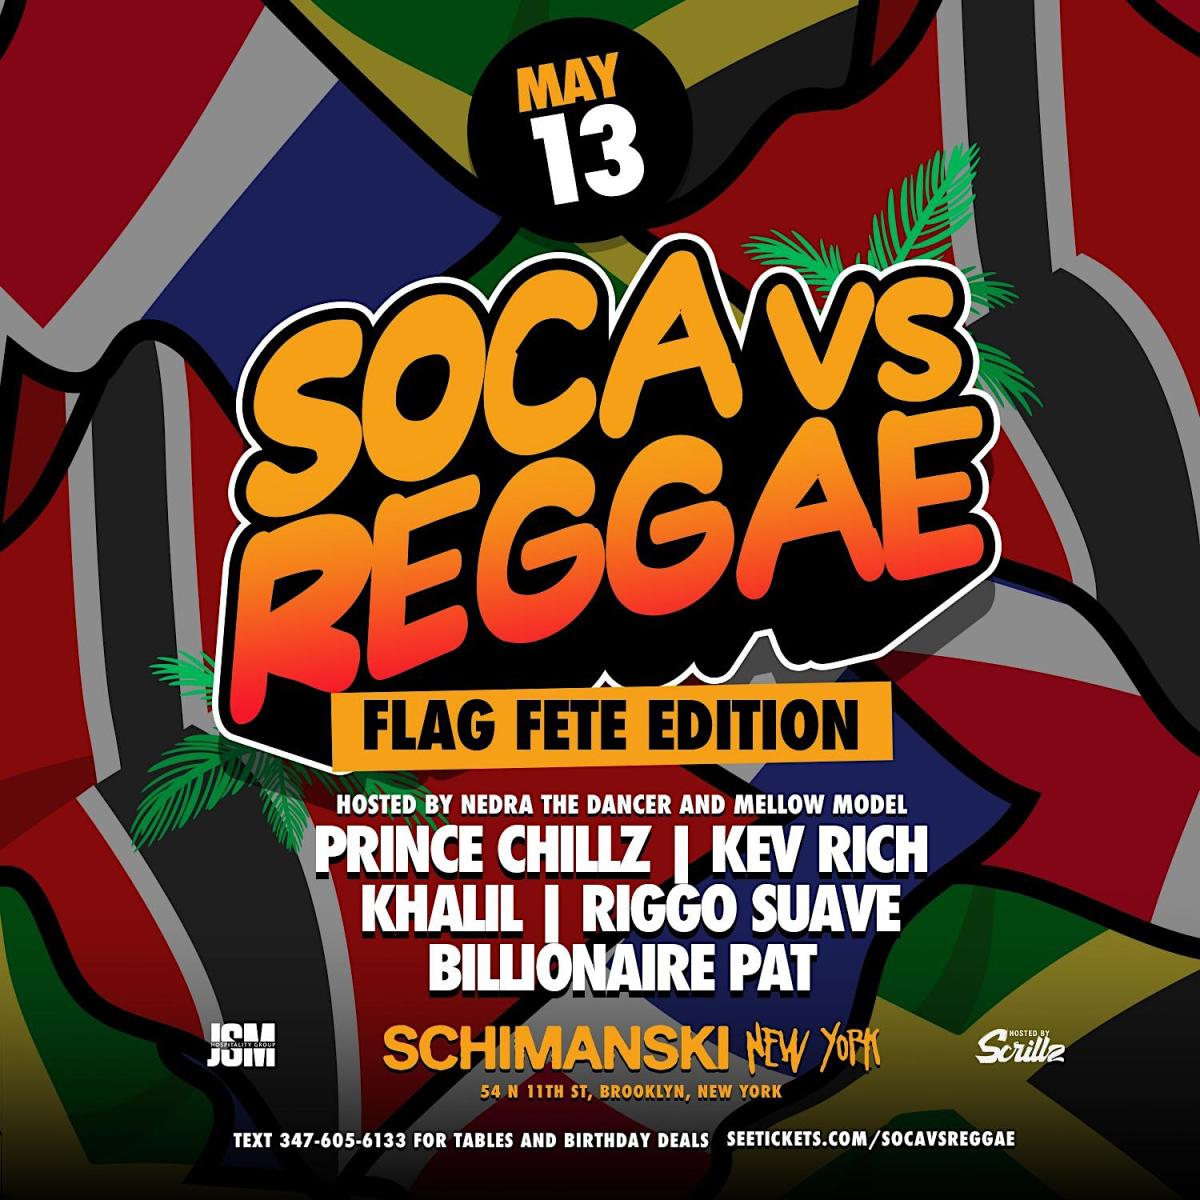 Soca Vs Reggae : Flag Fete Edition flyer or graphic.